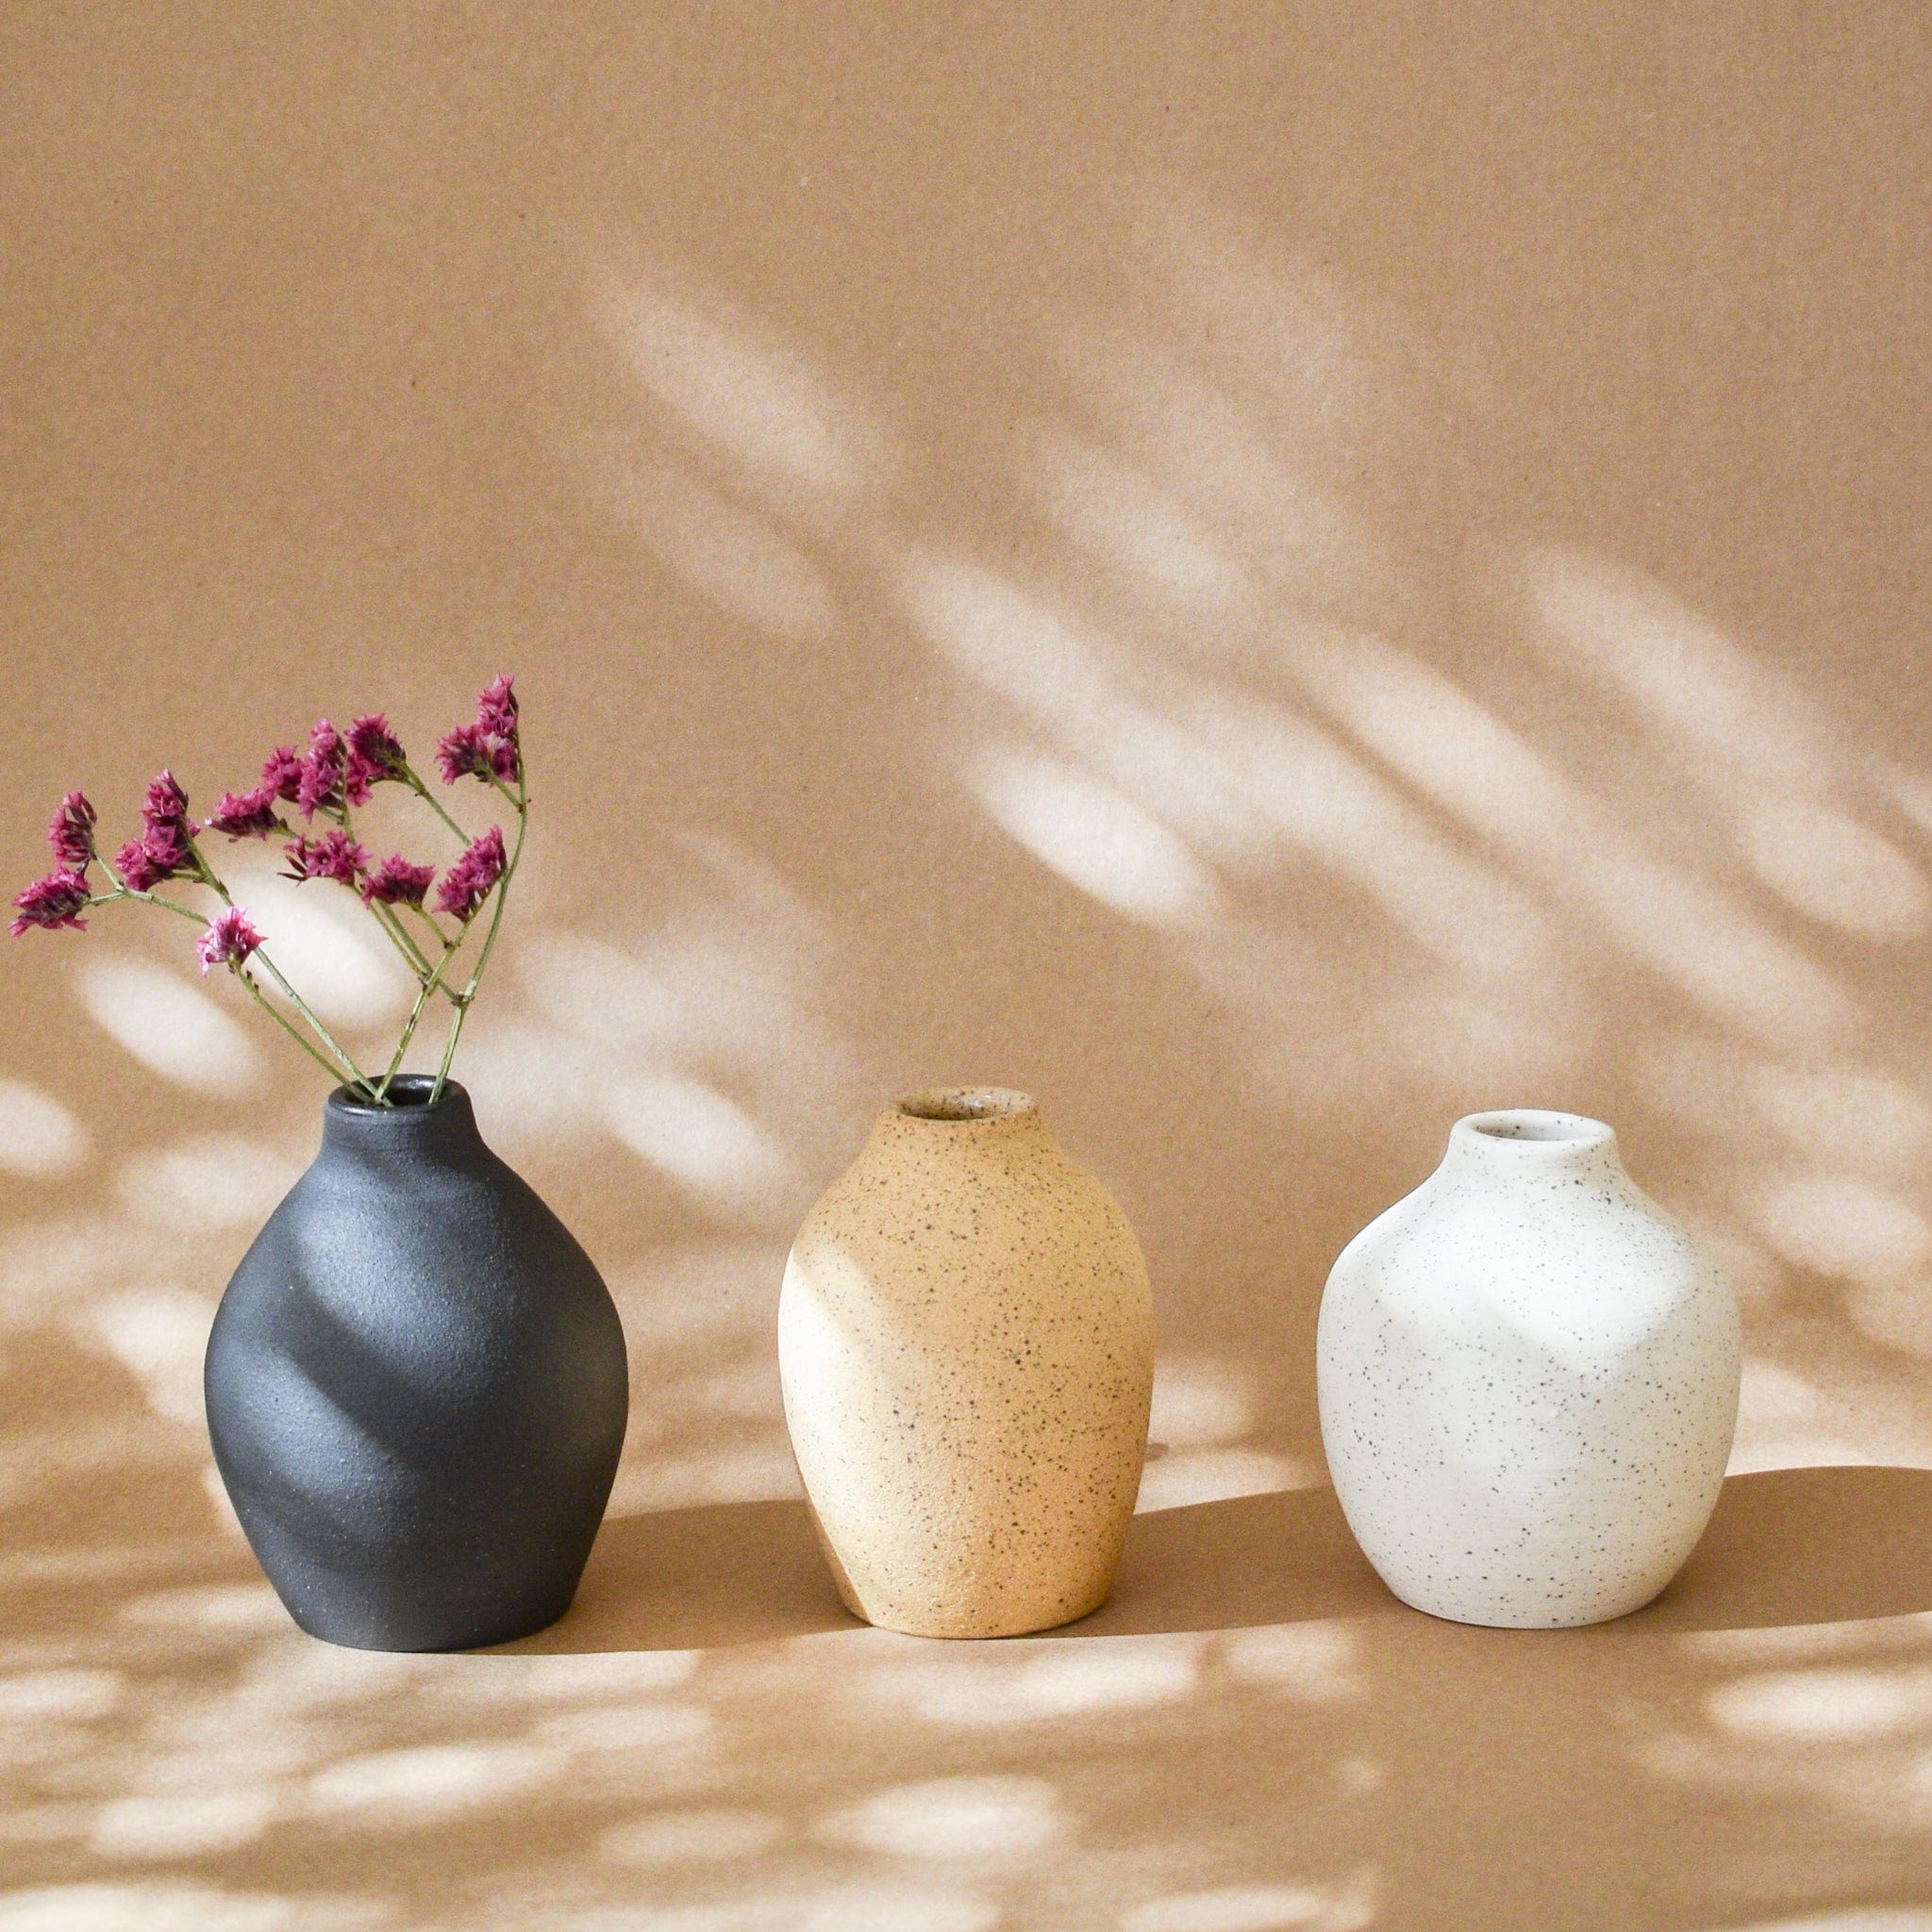 A WAYS AWAY Decor Black Matte Ceramic Bud Vase - Black Matte